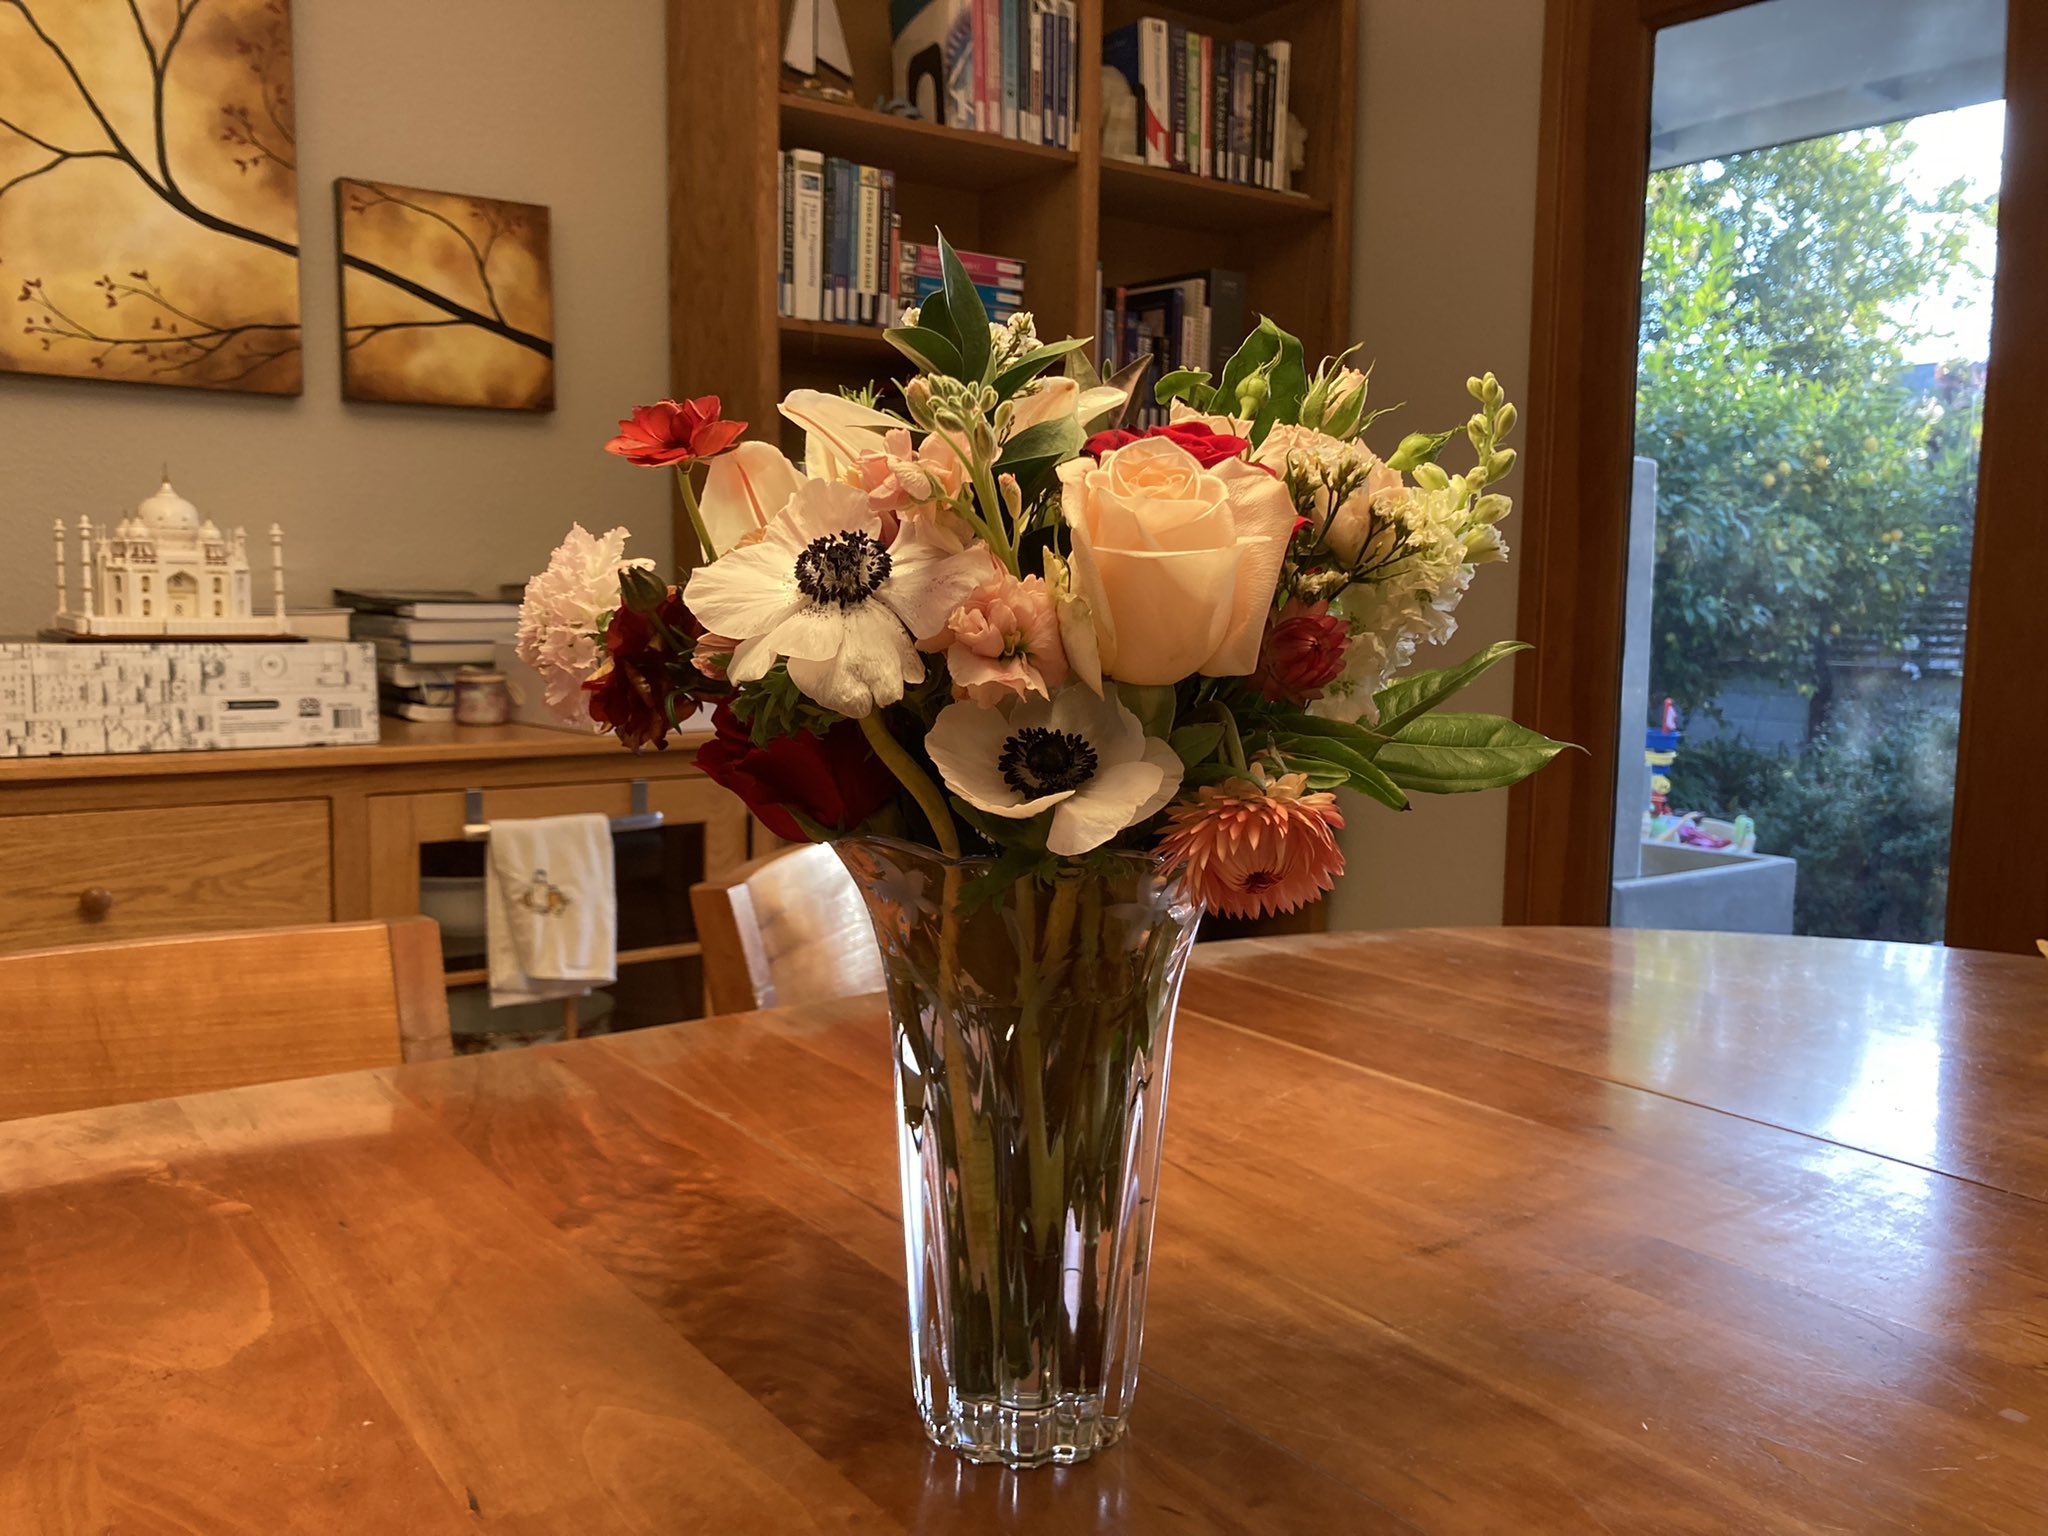 Flower arrangement in glass vase.